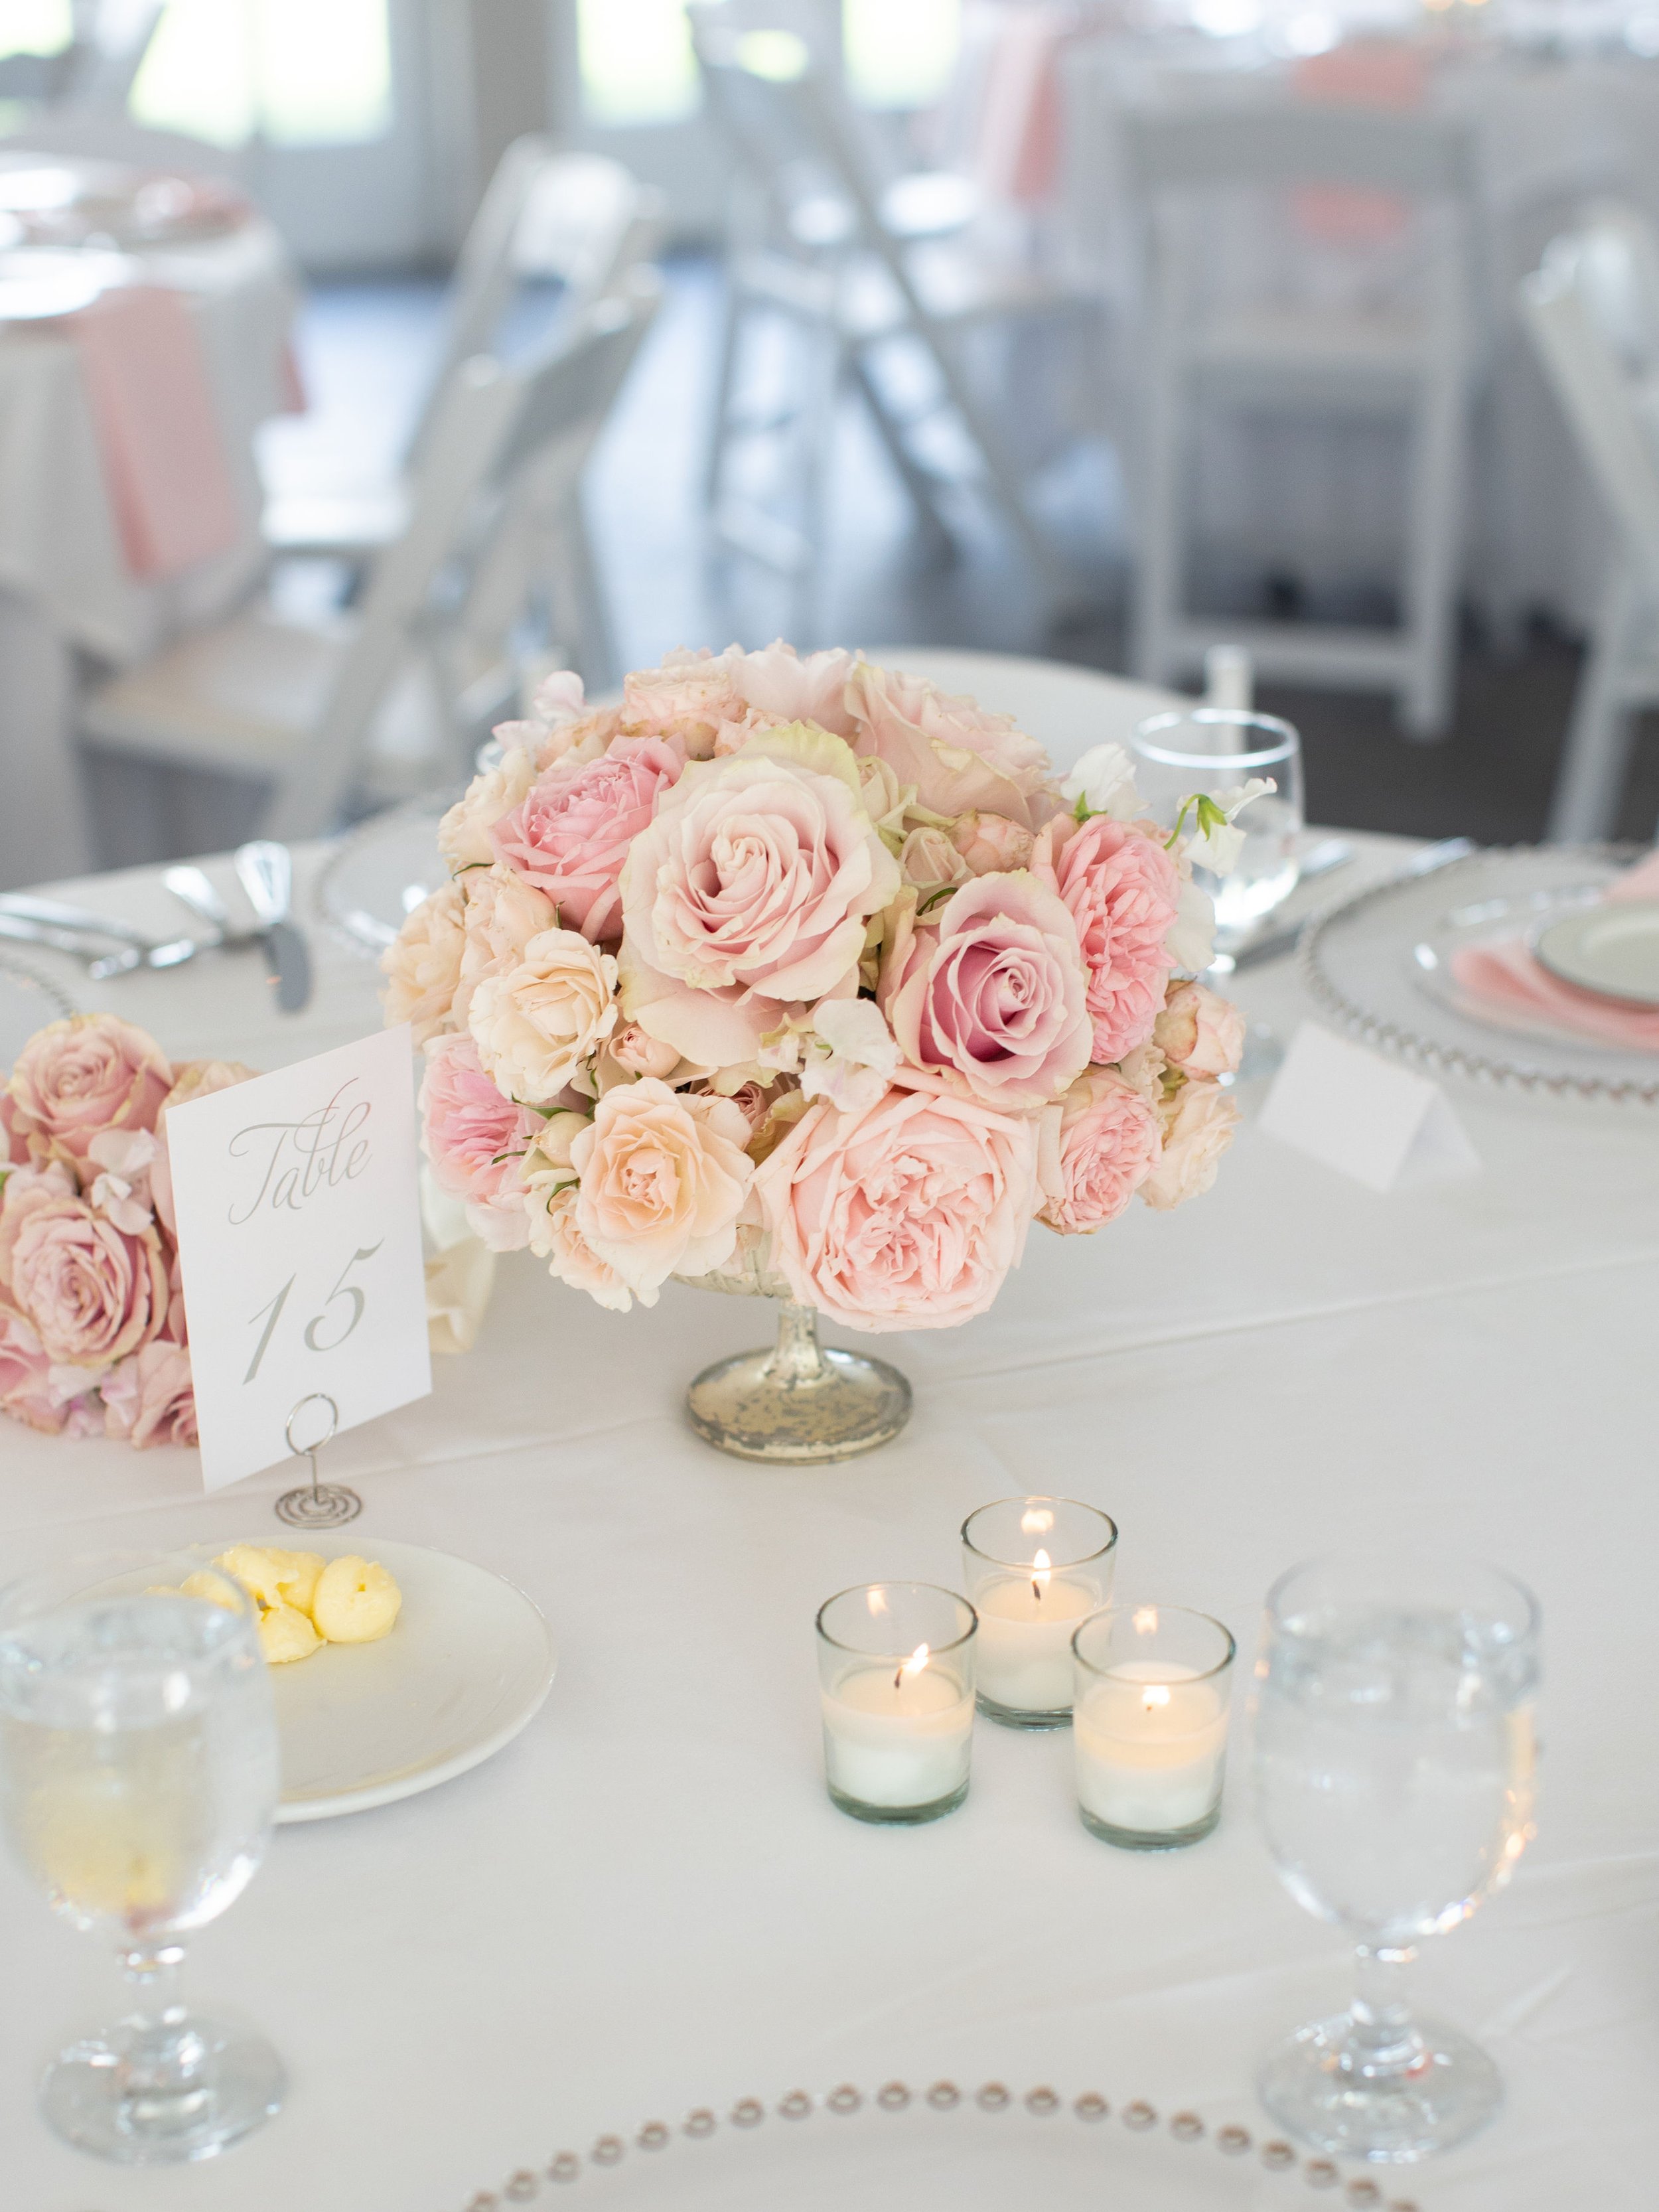 Rosenbaum+Wedding+Reception+Details-45.jpg